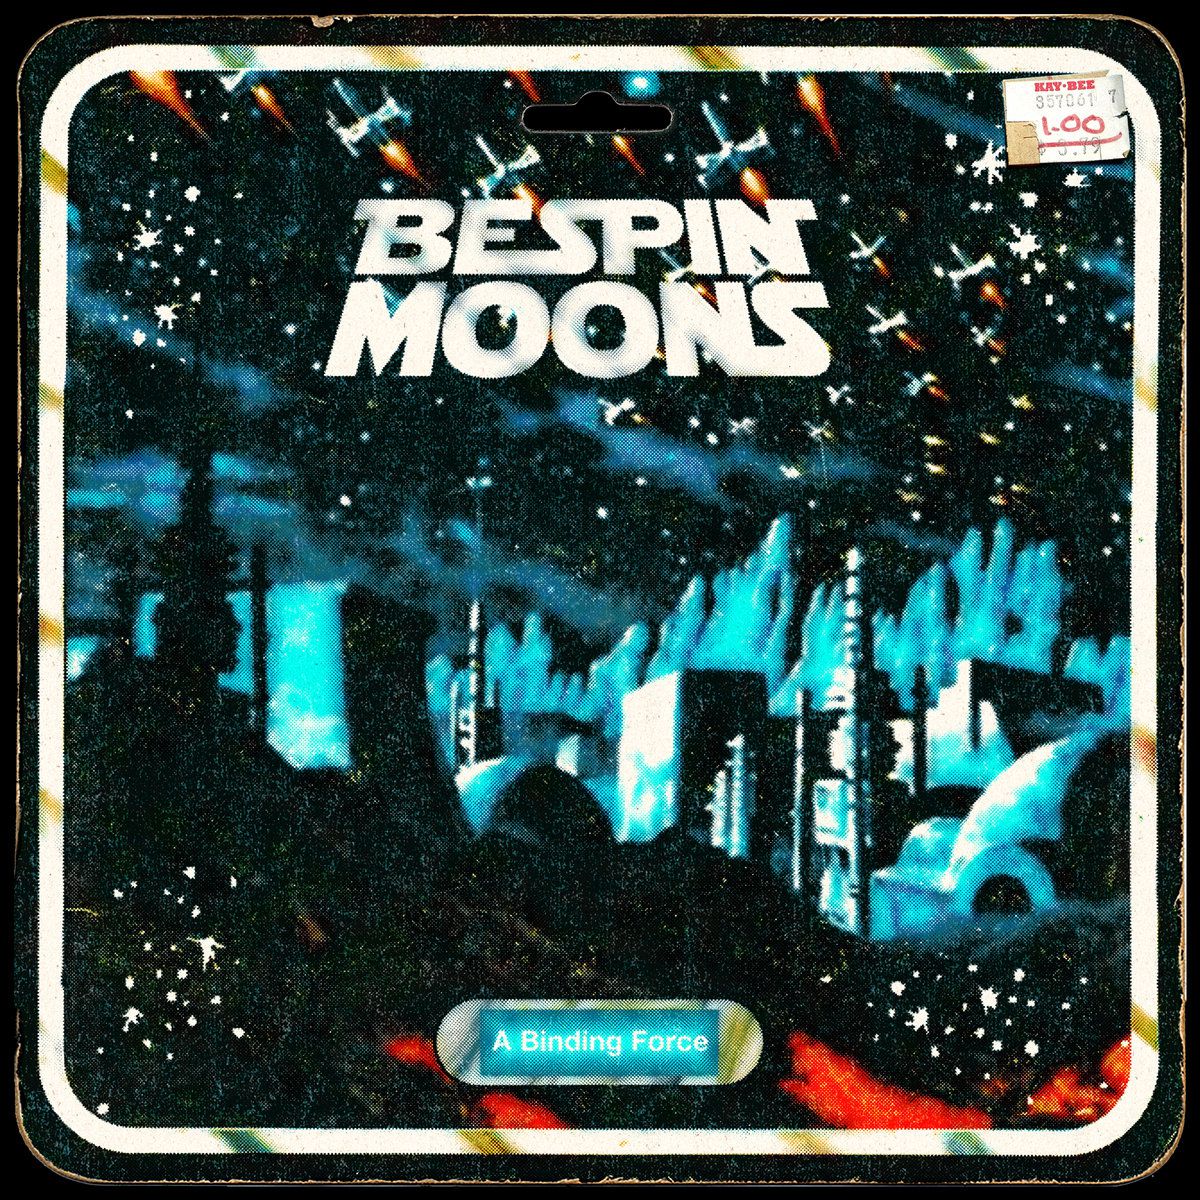 Bespin Moons - A Binding Force pour la Obi Owl Kenobi de Uiltje